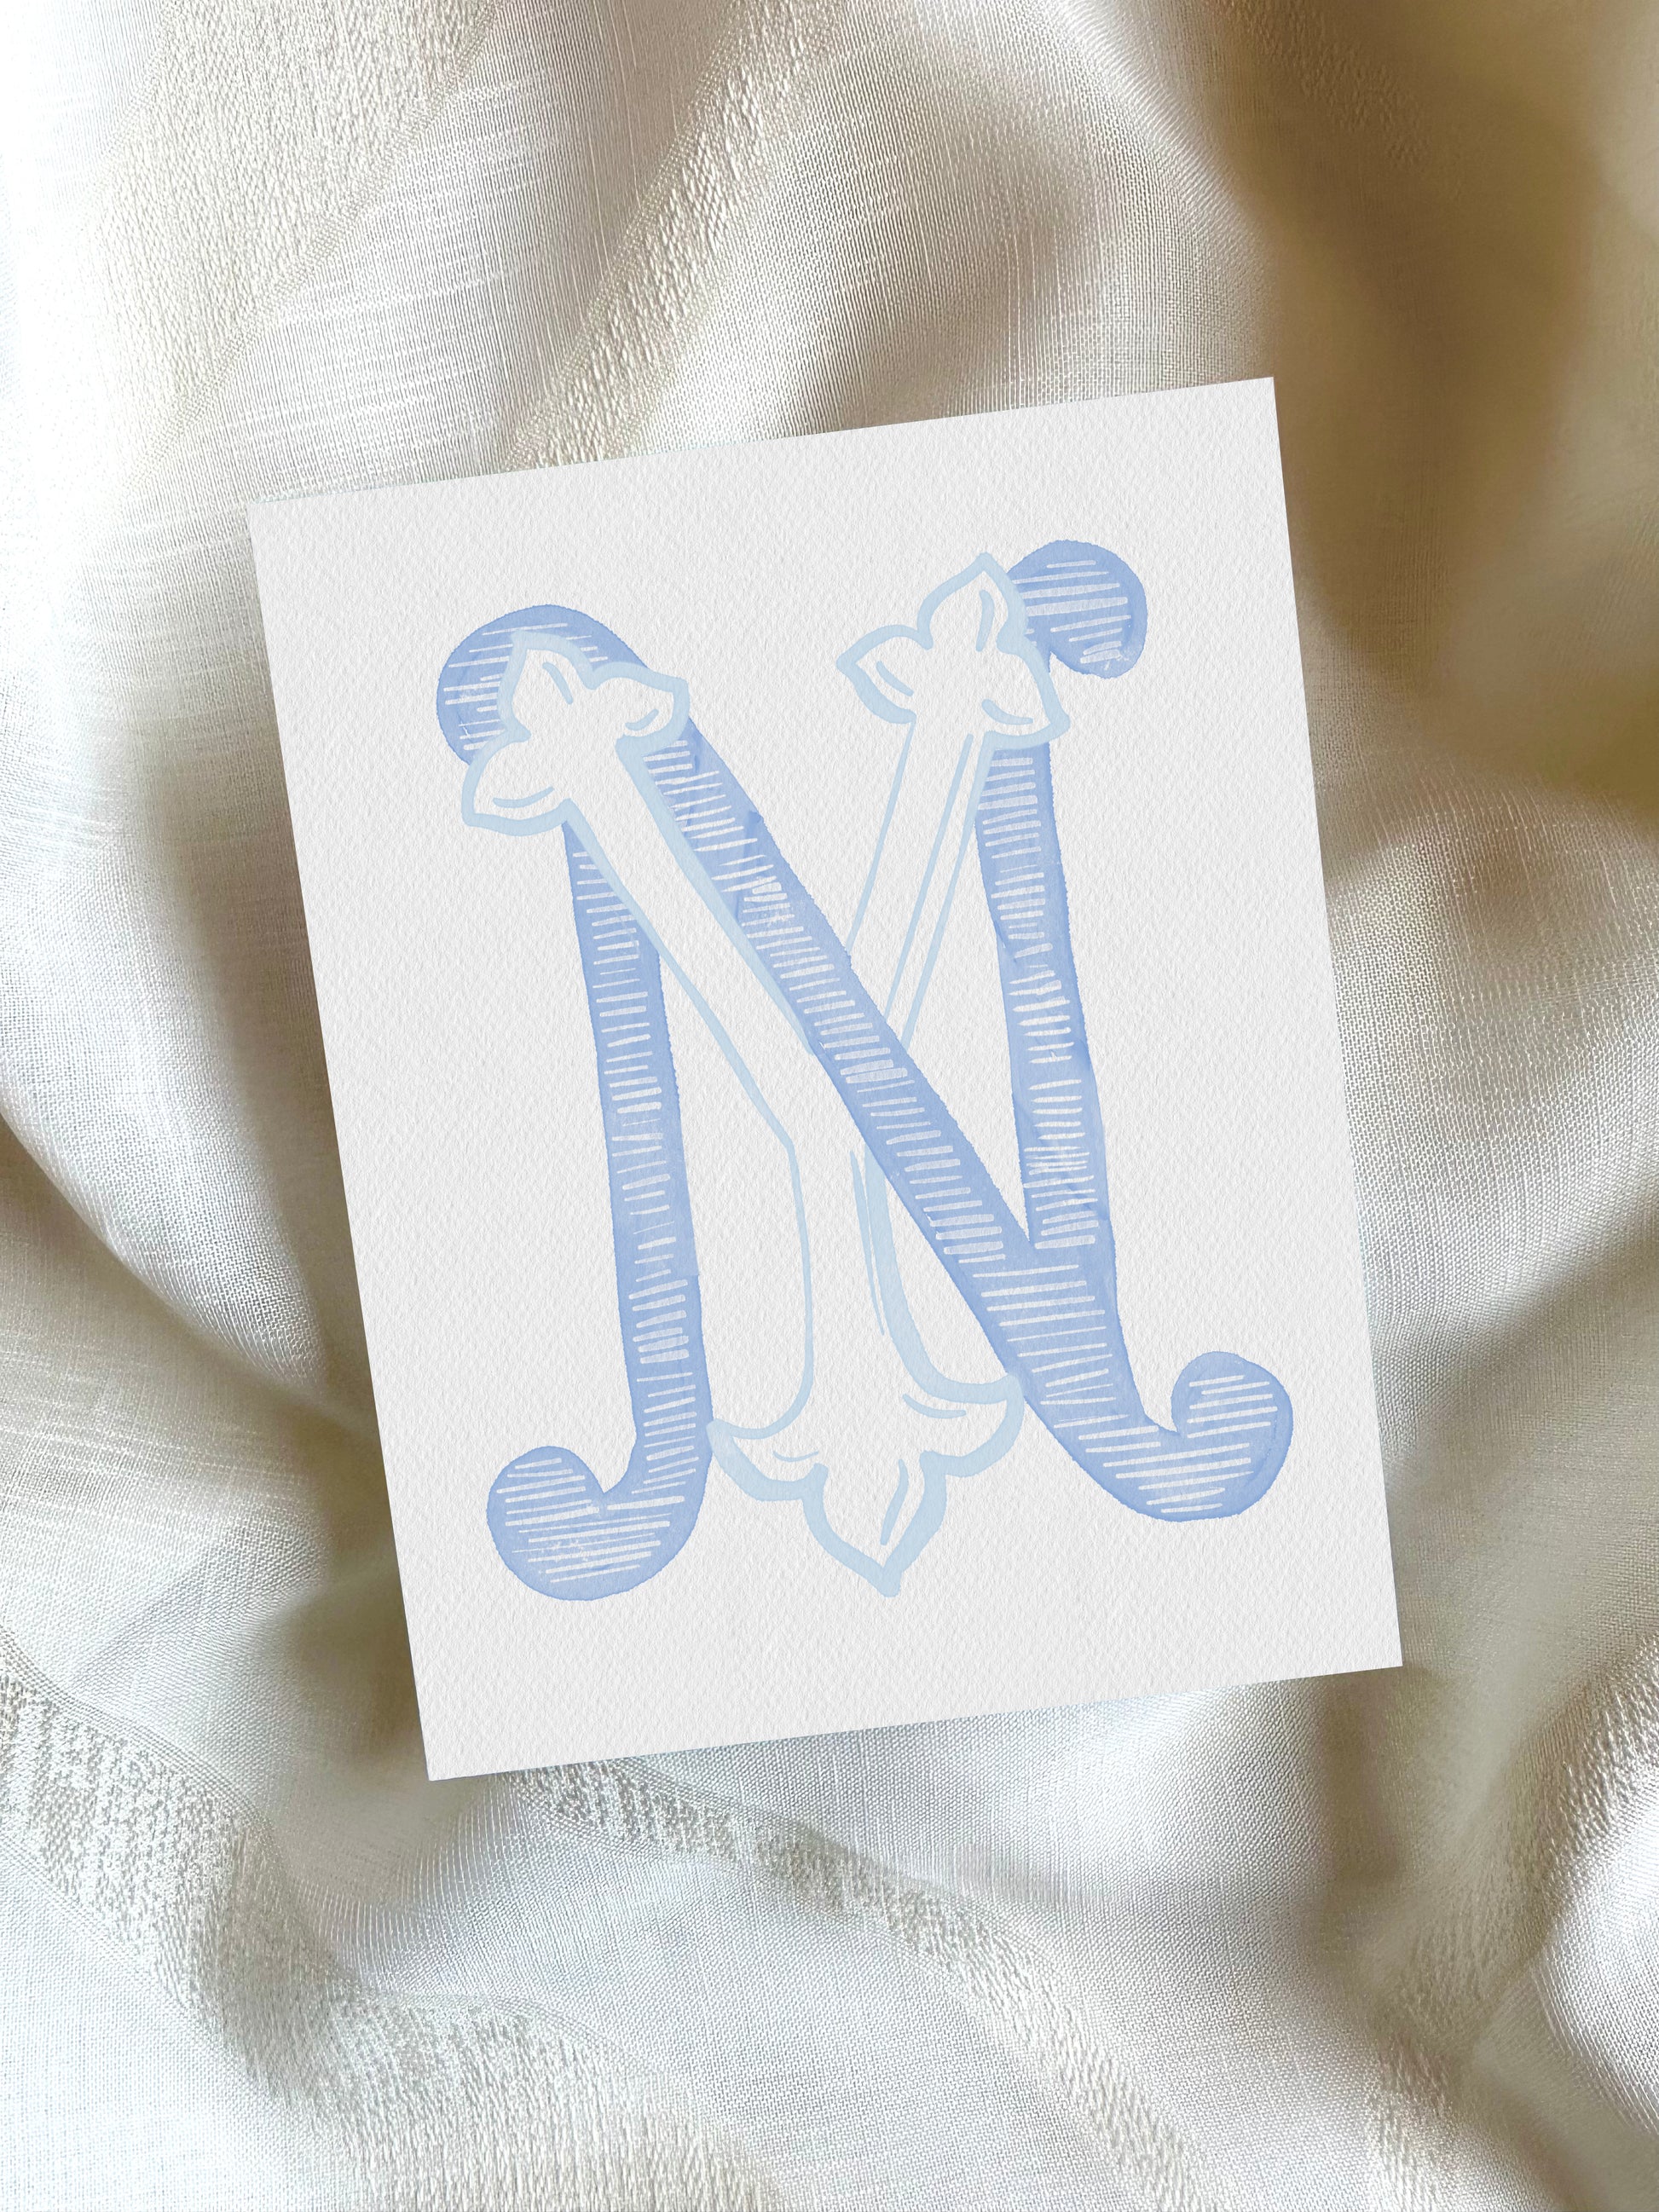 2 Letter Monogram with Letters NY YN | Digital Download - Wedding Monogram SVG, Personal Logo, Wedding Logo for Wedding Invitations The Wedding Crest Lab